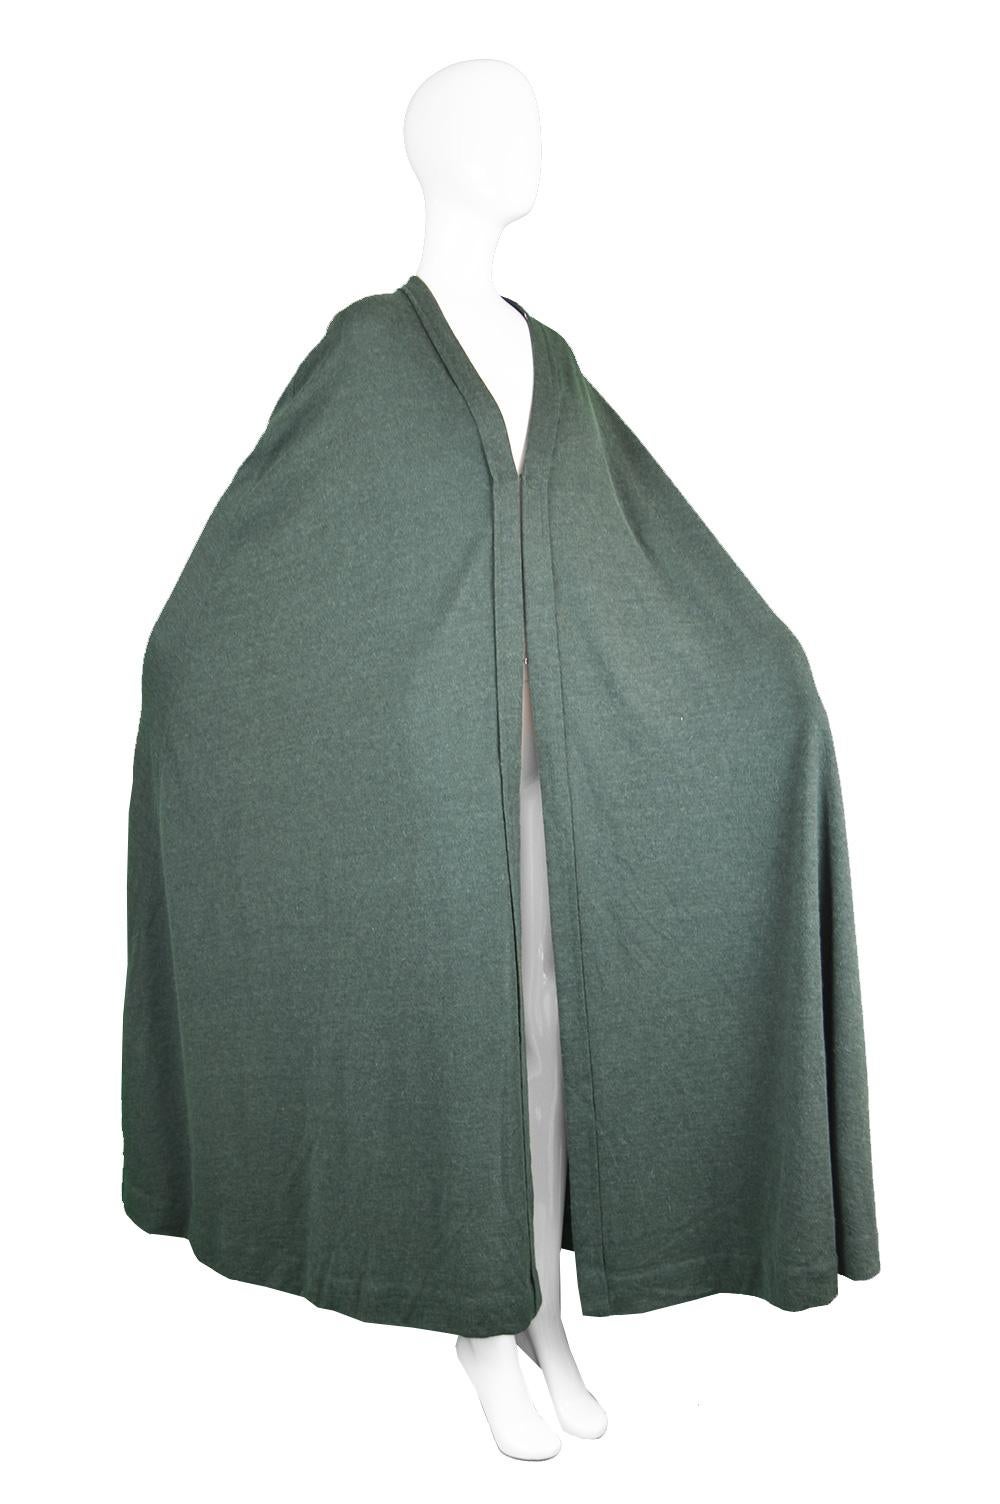 Lanvin Haute Couture Unstructured Green Wool Knit Maxi Cape Cloak, 1970s For Sale 1